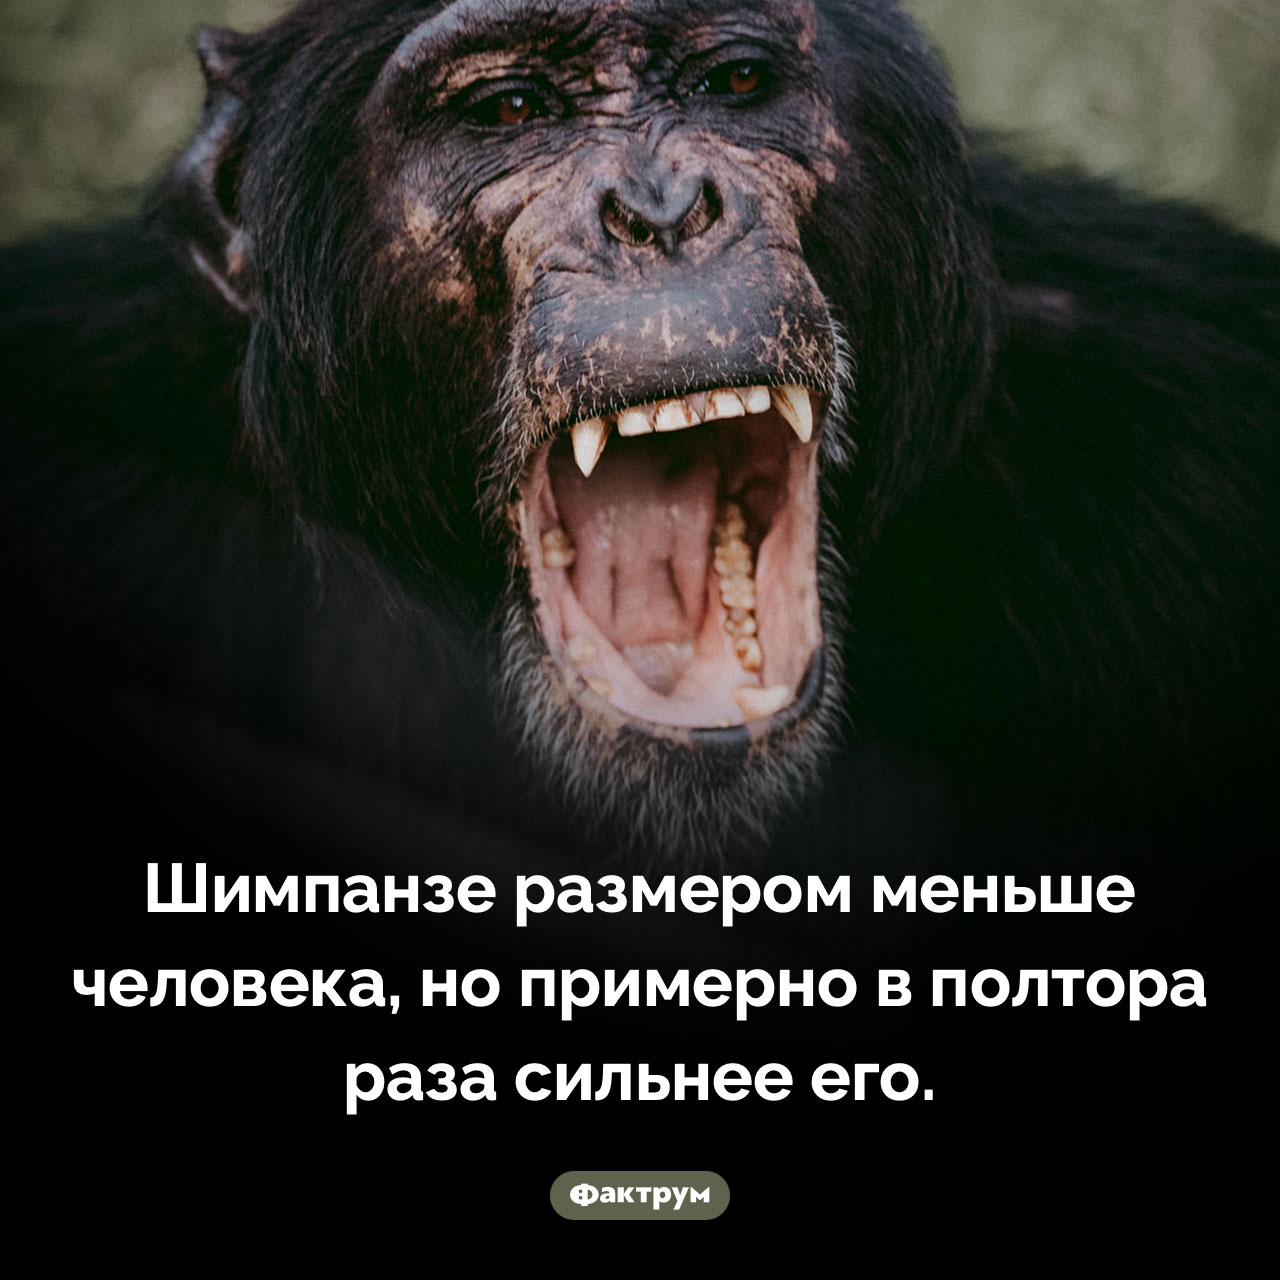 Сила шимпанзе